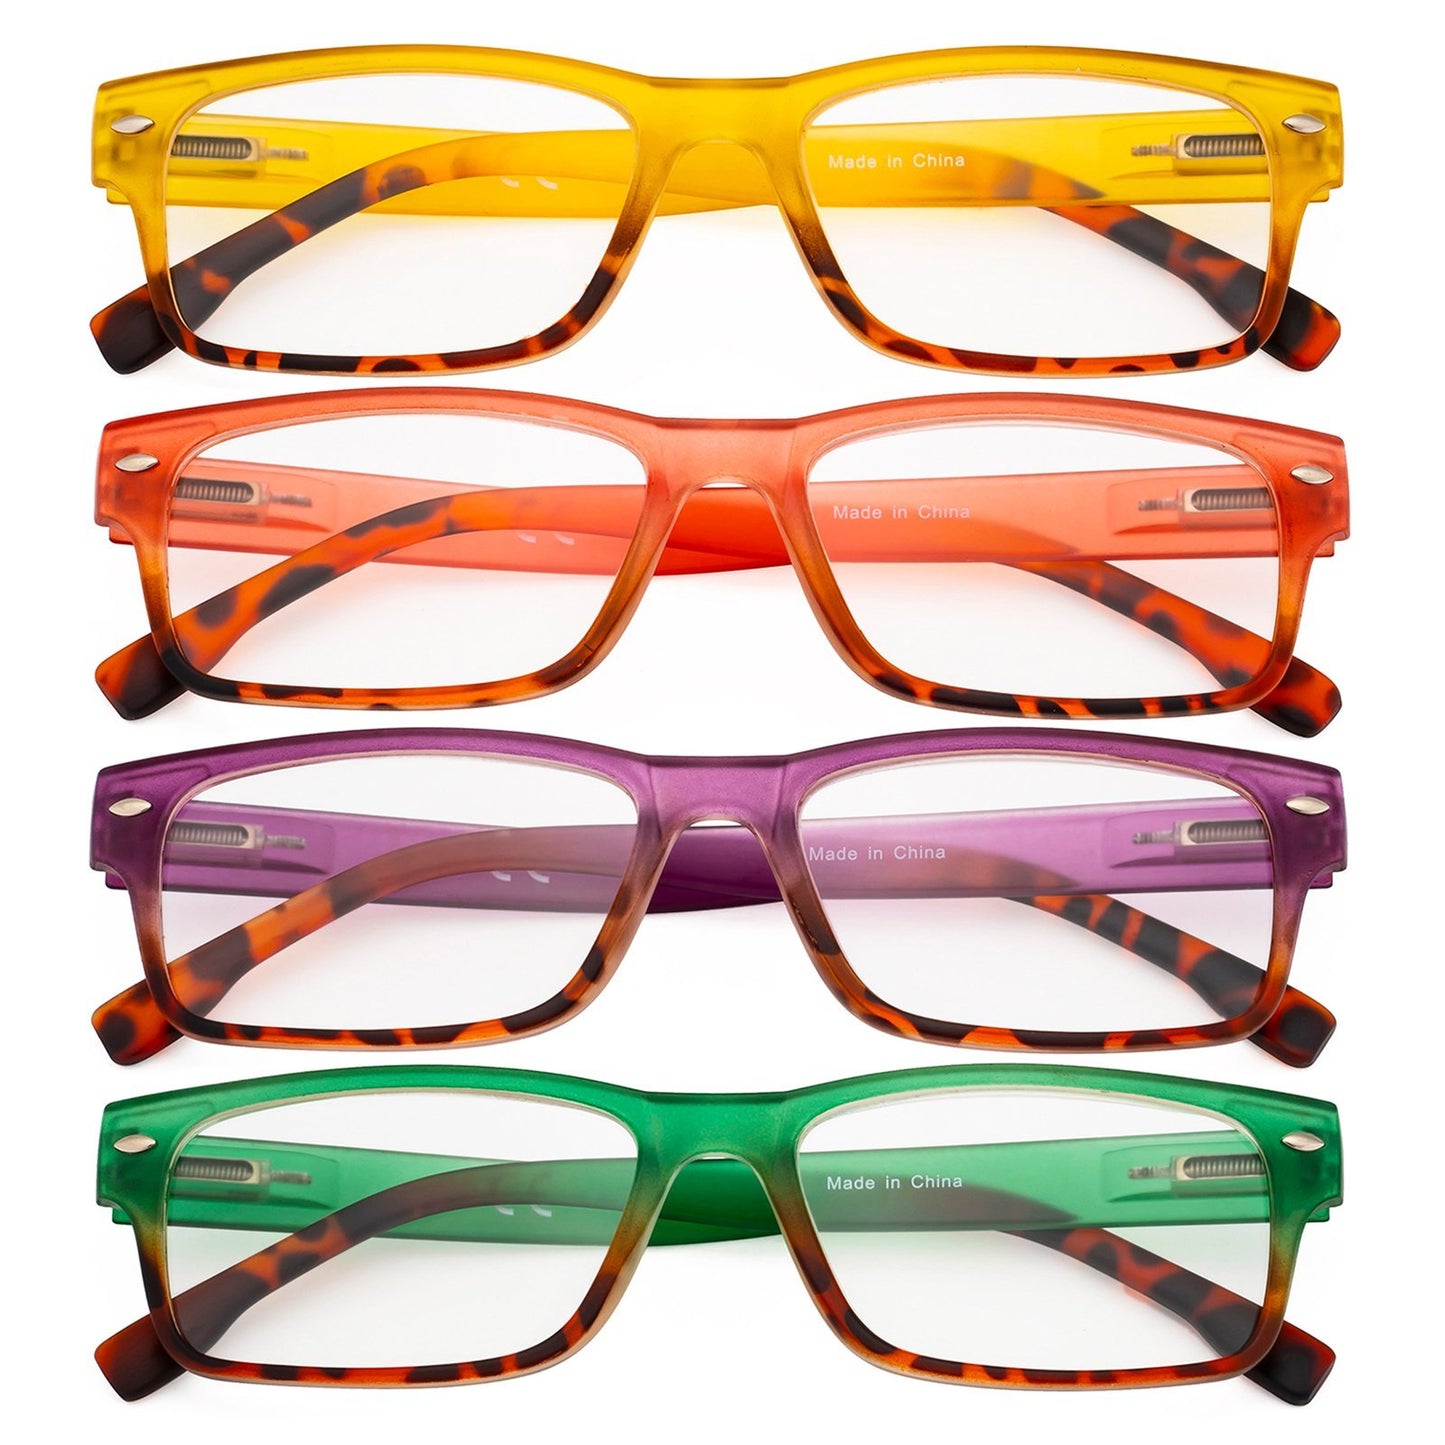 4 Pack Adorable Reading Glasses for Women Reading R108D